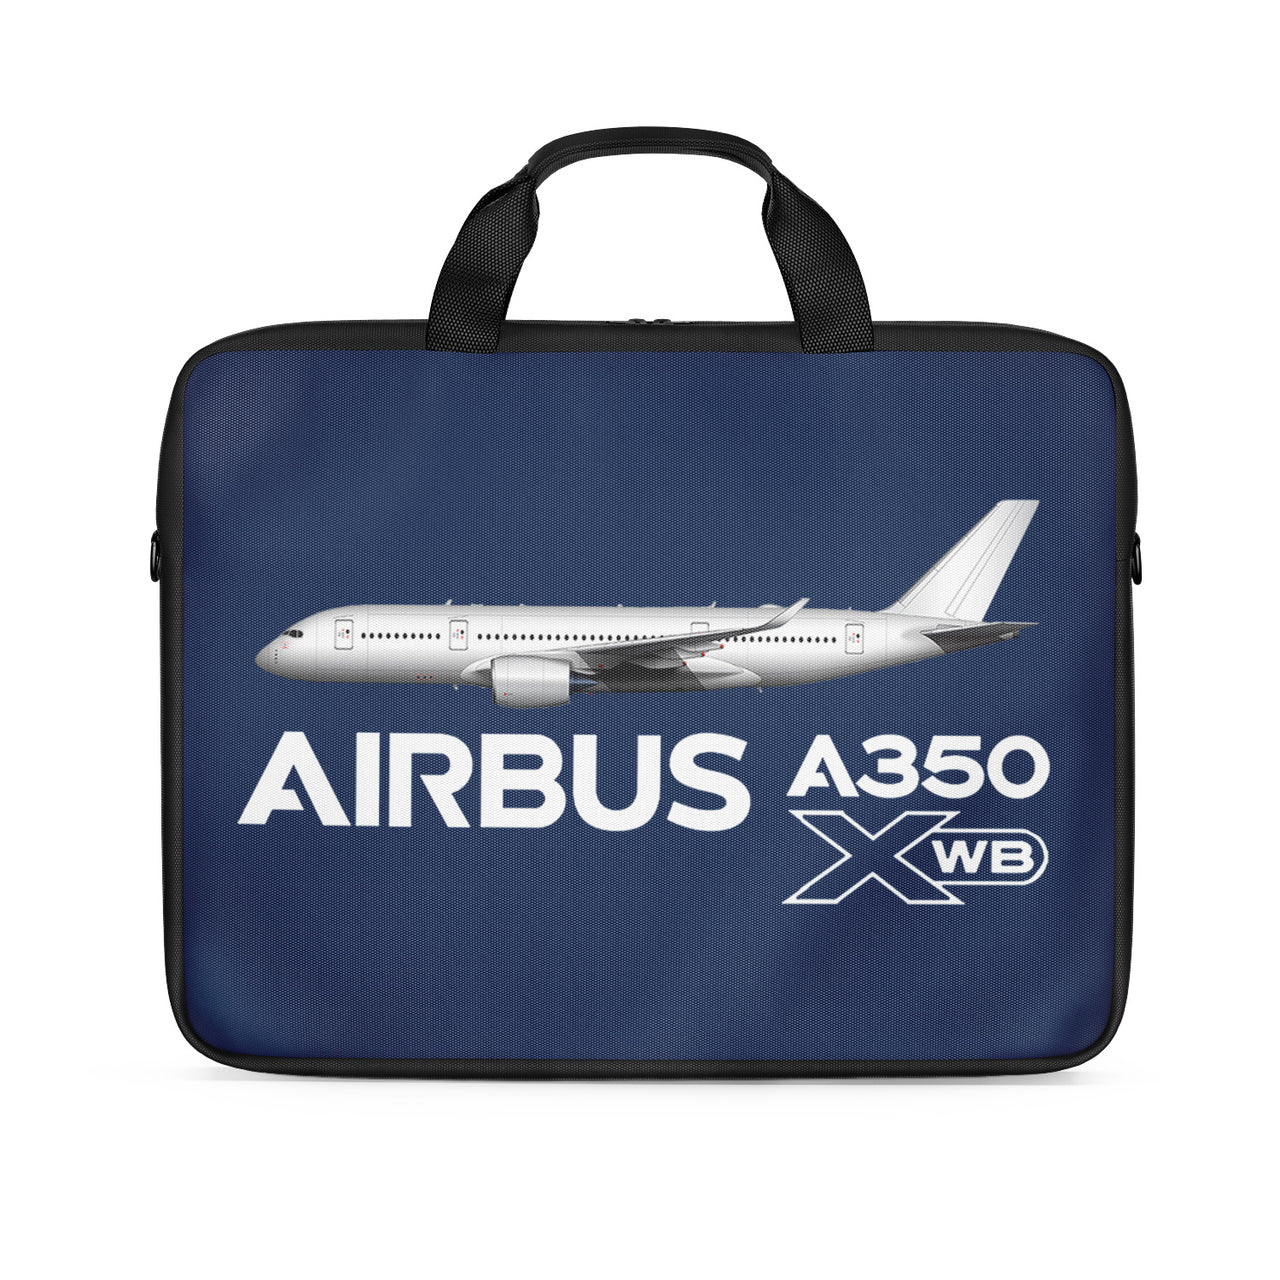 The Airbus A350 WXB Designed Laptop & Tablet Bags